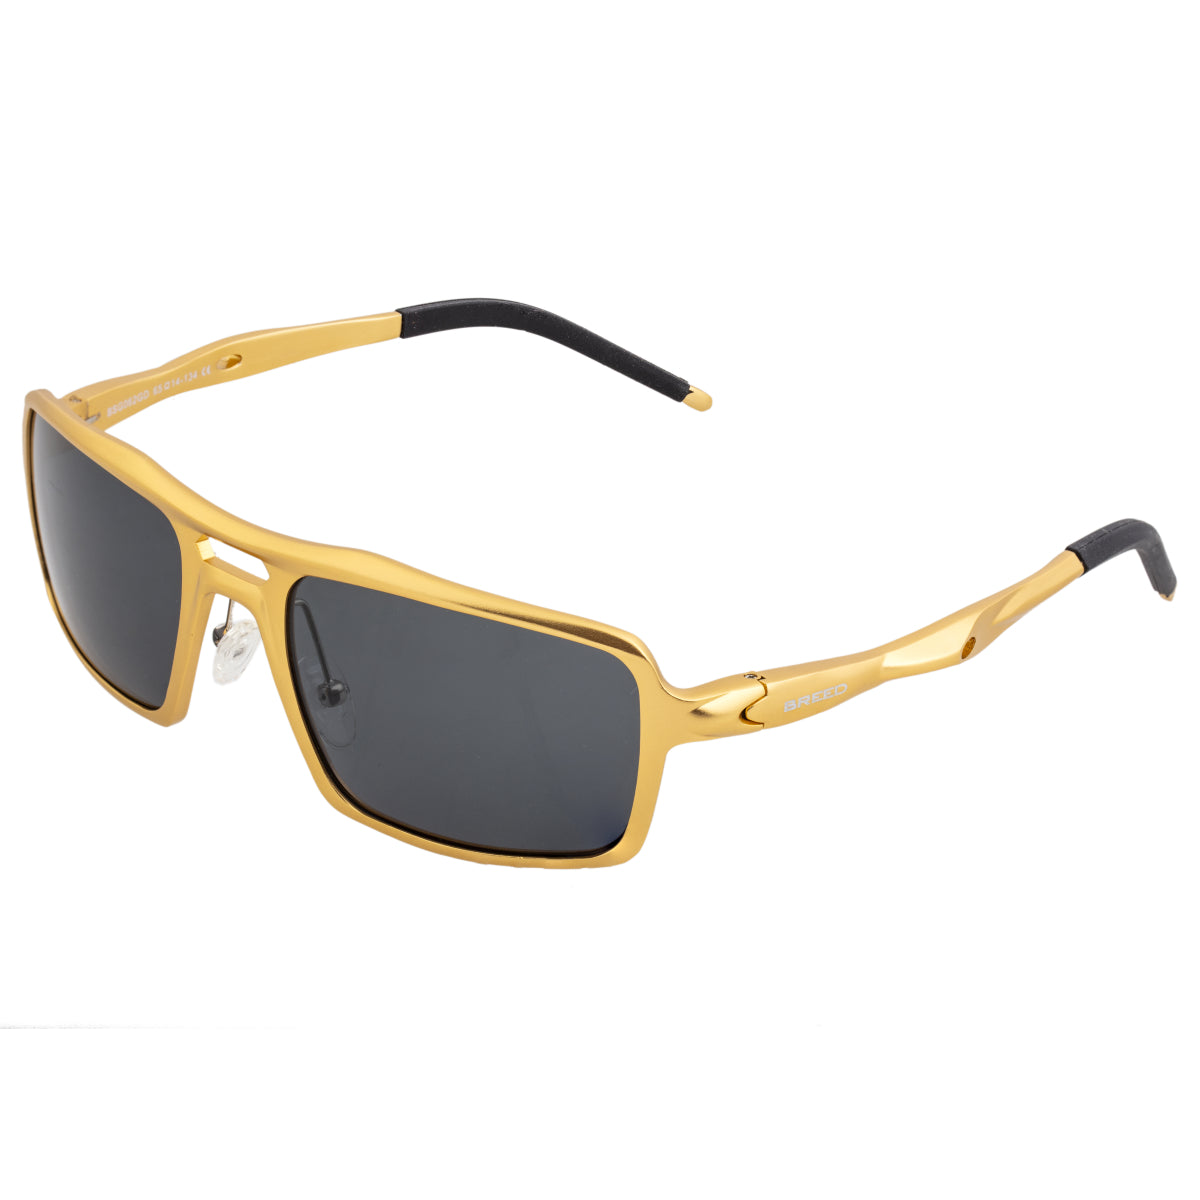 Breed Orpheus Aluminum Polarized Sunglasses - Gold/Black - BSG062GD